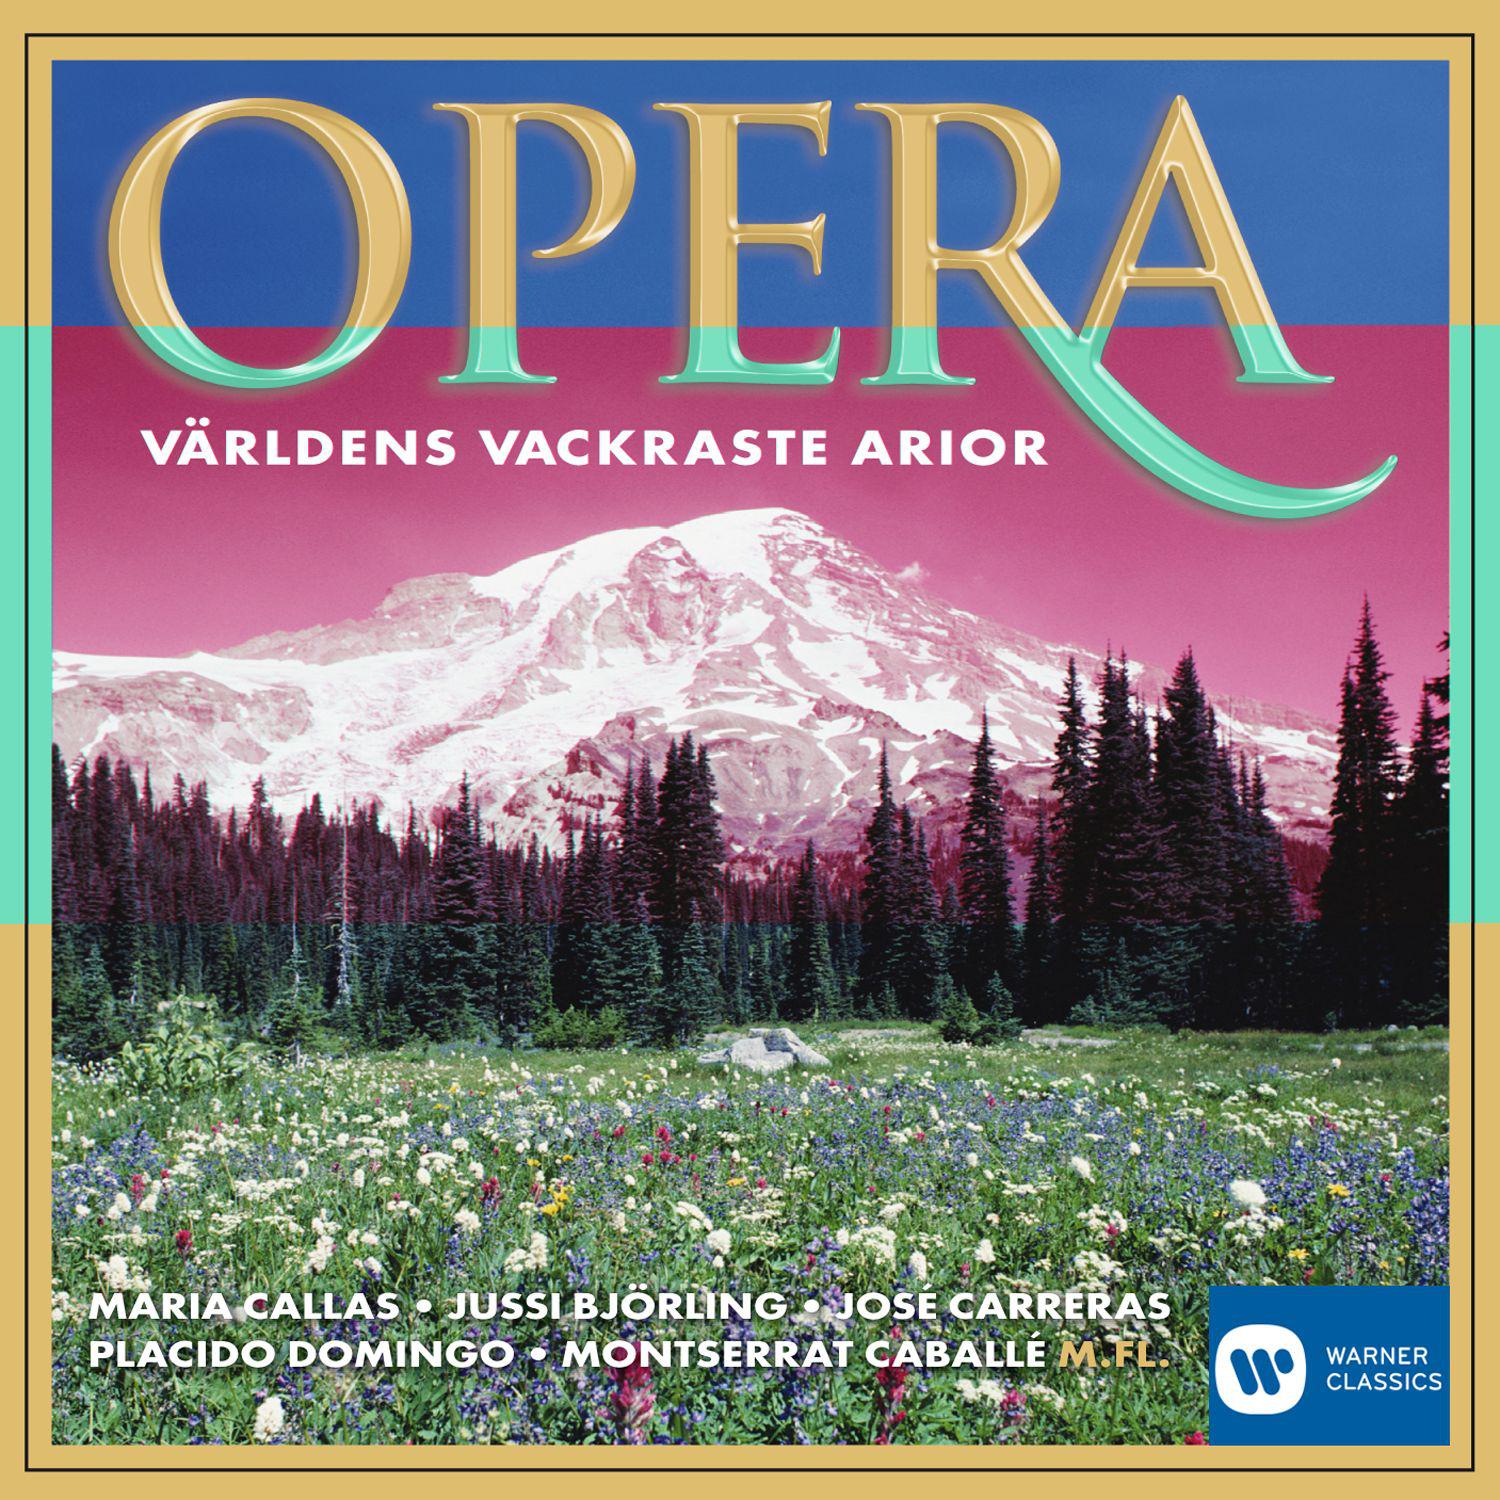 Opera  V rldens vackraste arior  The Most Beautiful Arias in the World